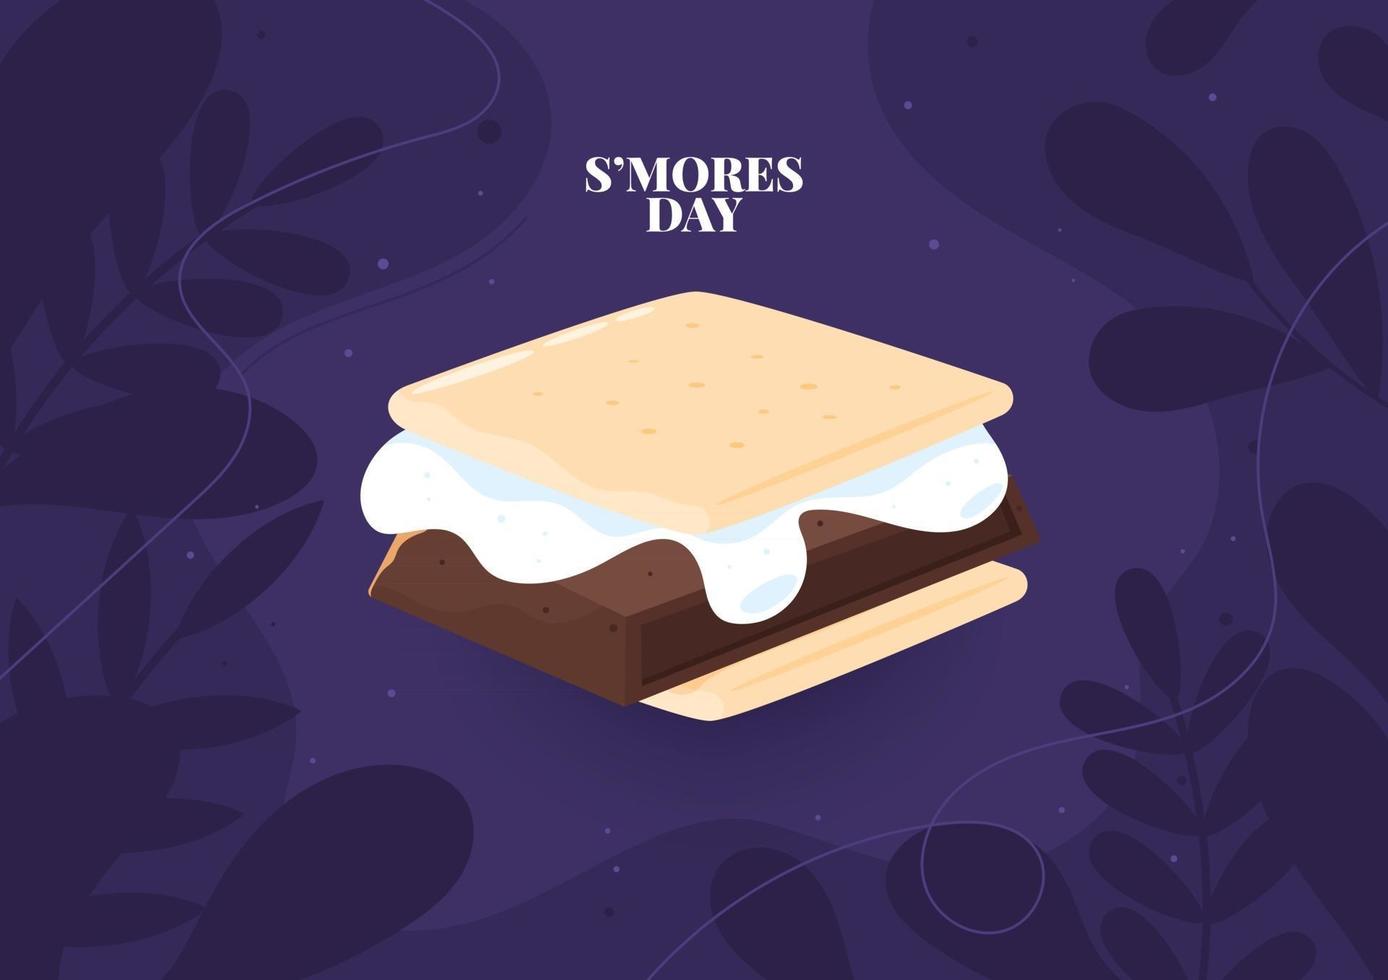 nationale s'mores dag. cracker, chocolade, marshmallow illustratie vector